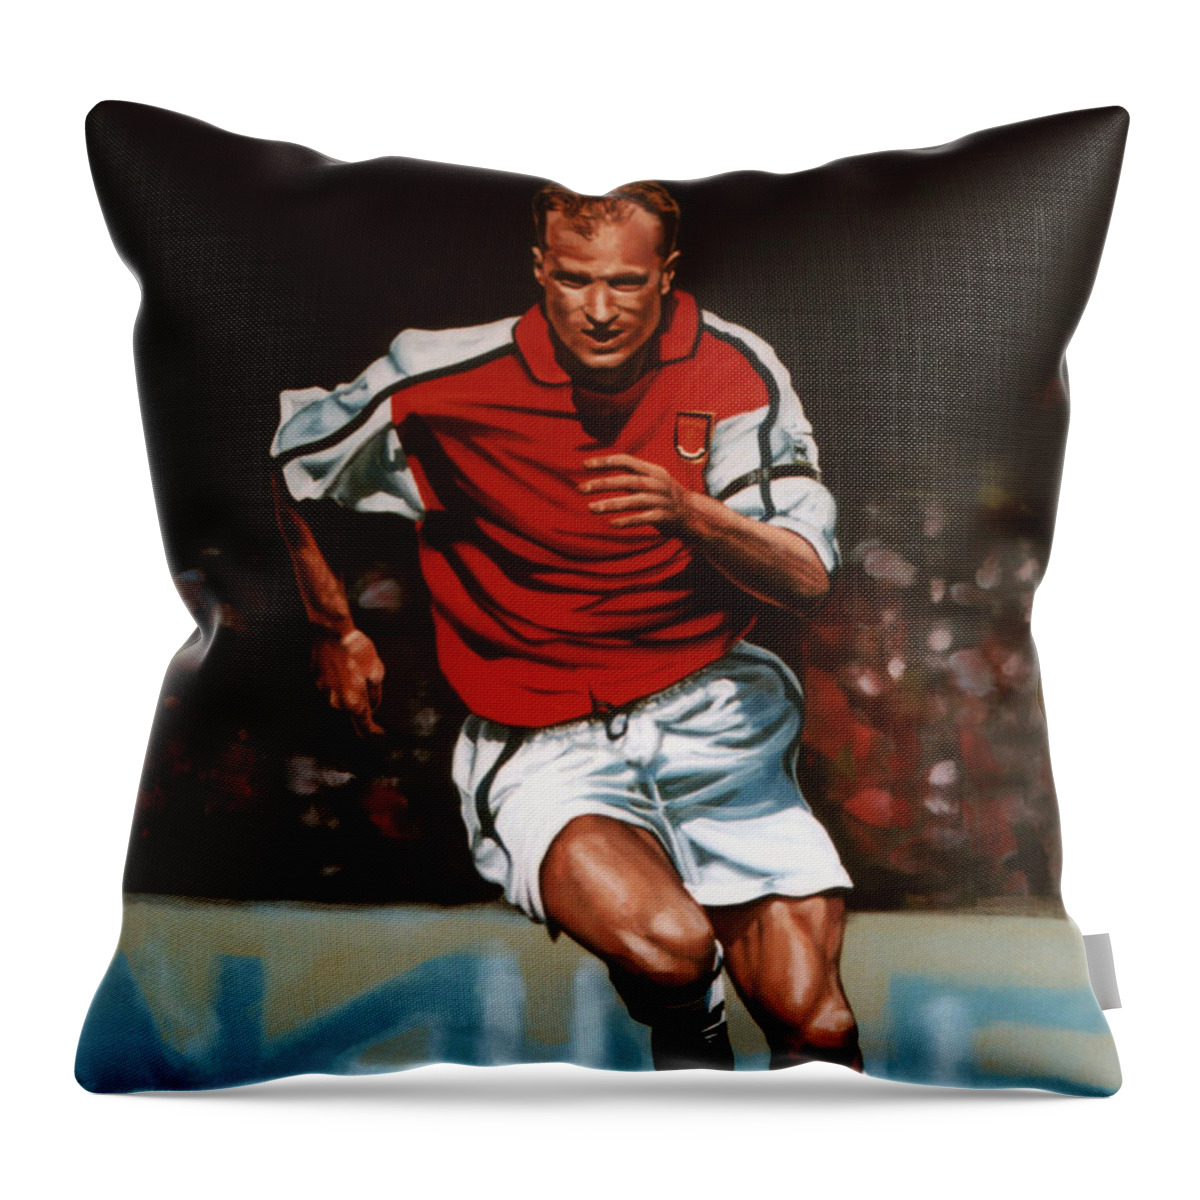 Dennis Bergkamp Throw Pillow featuring the painting Dennis Bergkamp by Paul Meijering